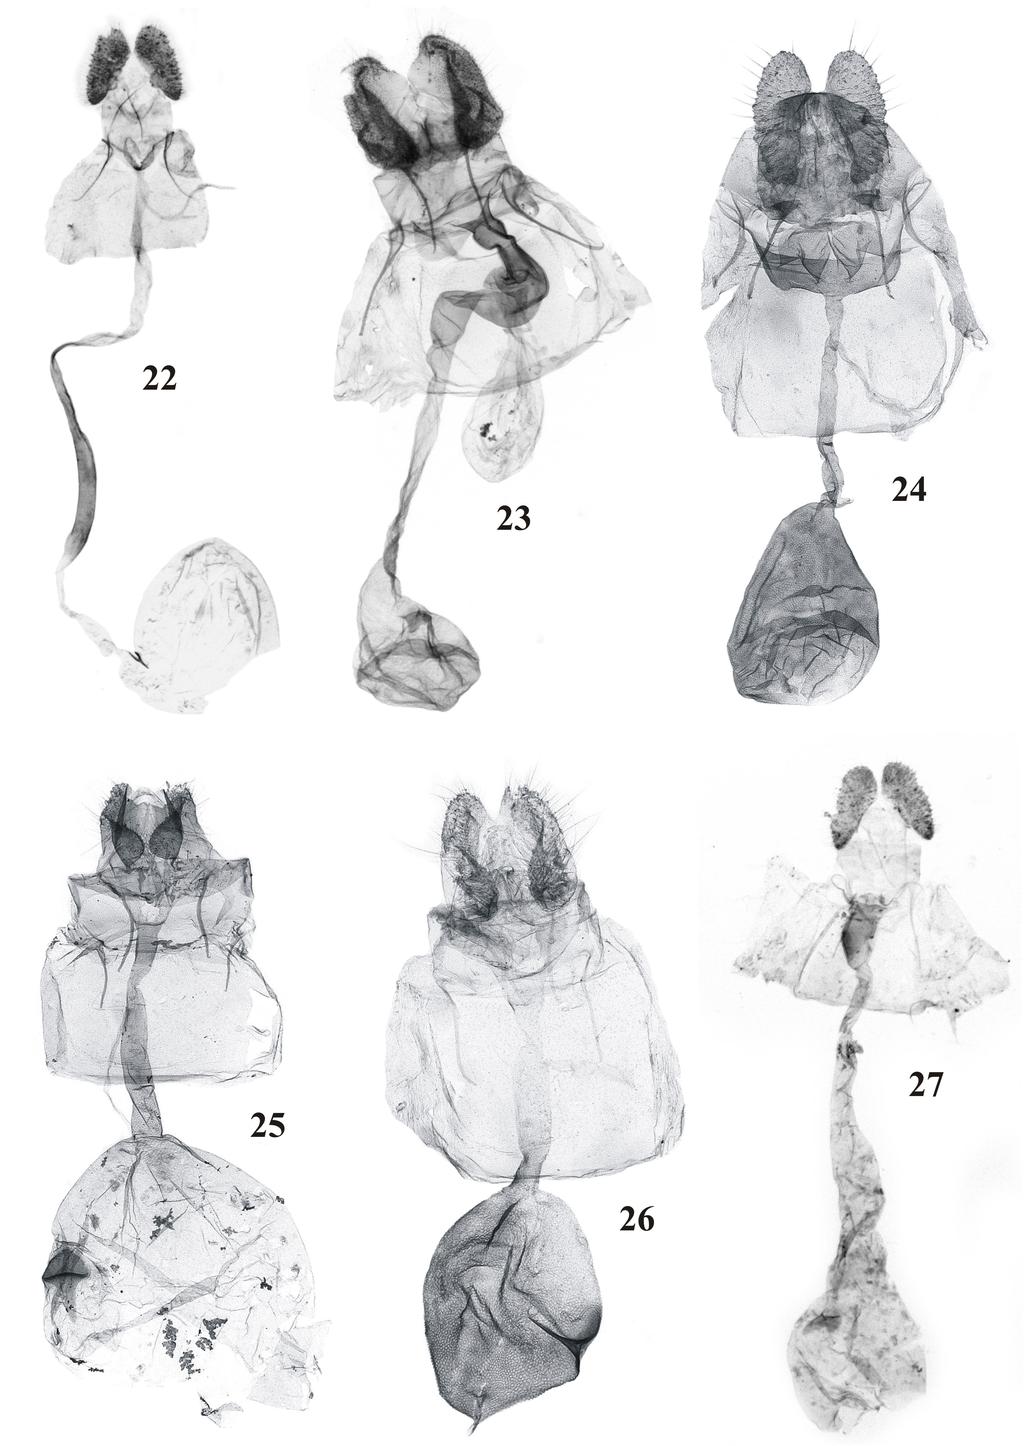 228 Polish Journal of Entomology 77 (3) Figs 22-27. Female genitalia: 22 Gnorismoneura elegantica sp. n., paratype; 23 G. calyptrimorpha sp. n., paratype; 24 Terthreutis furcata sp.